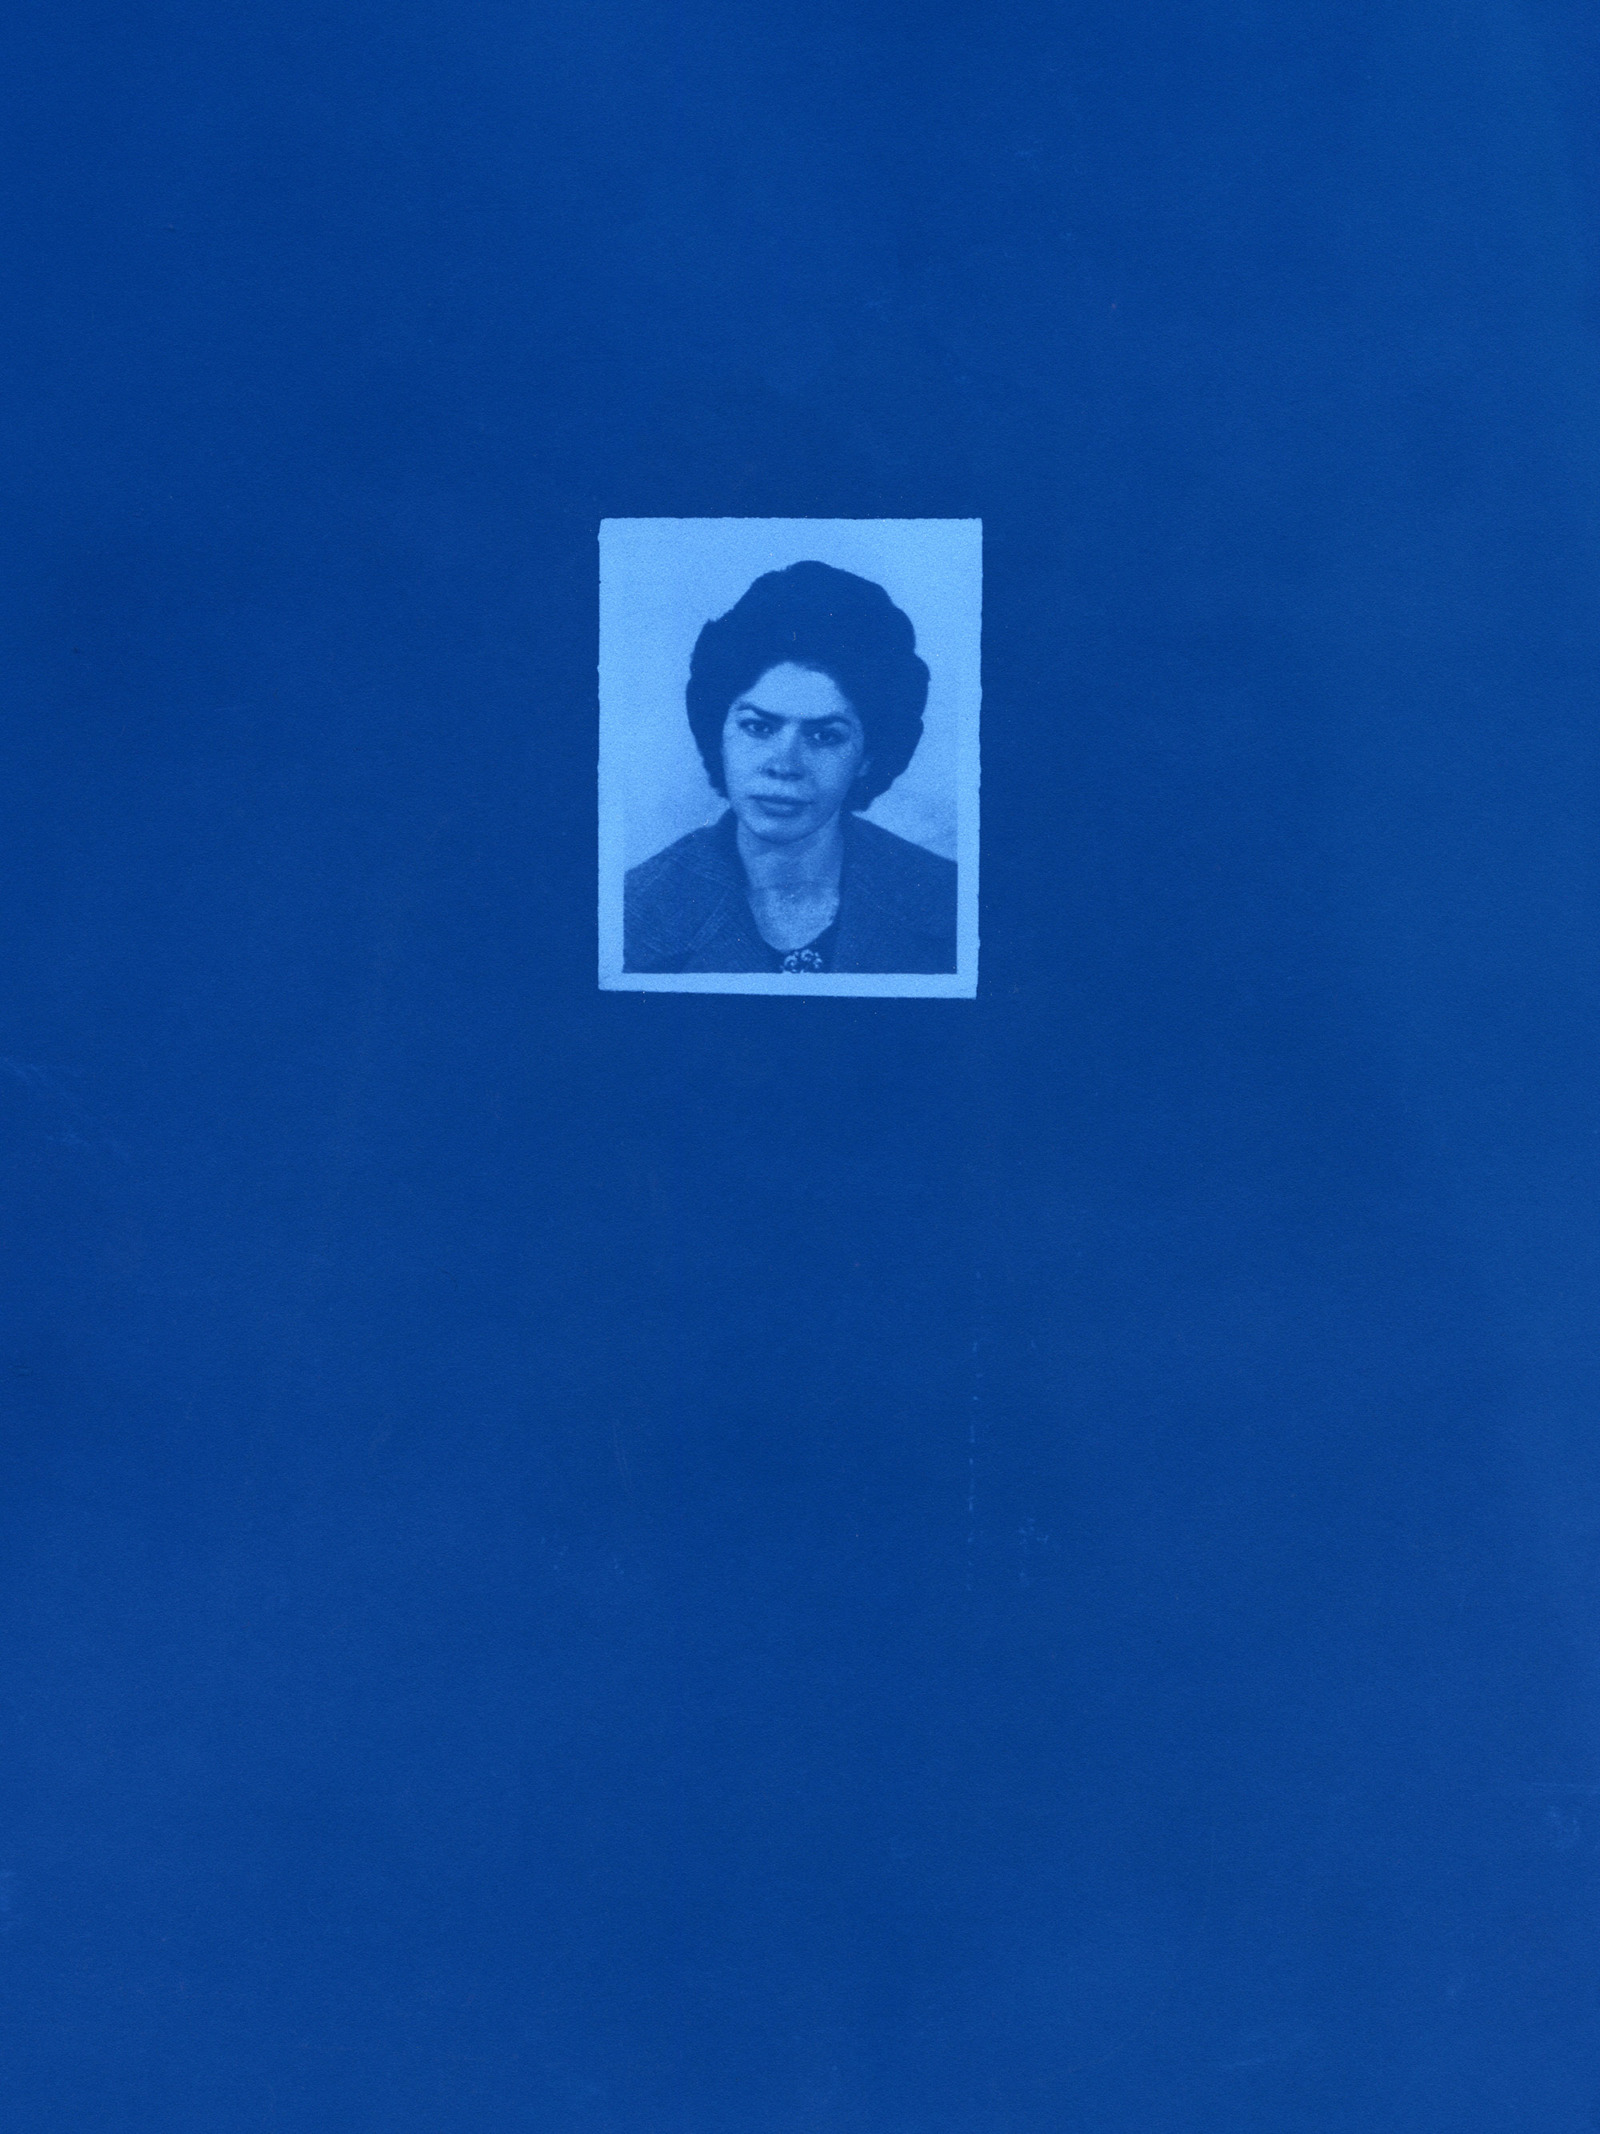 A cyanotype of an old passport photograph of a woman.